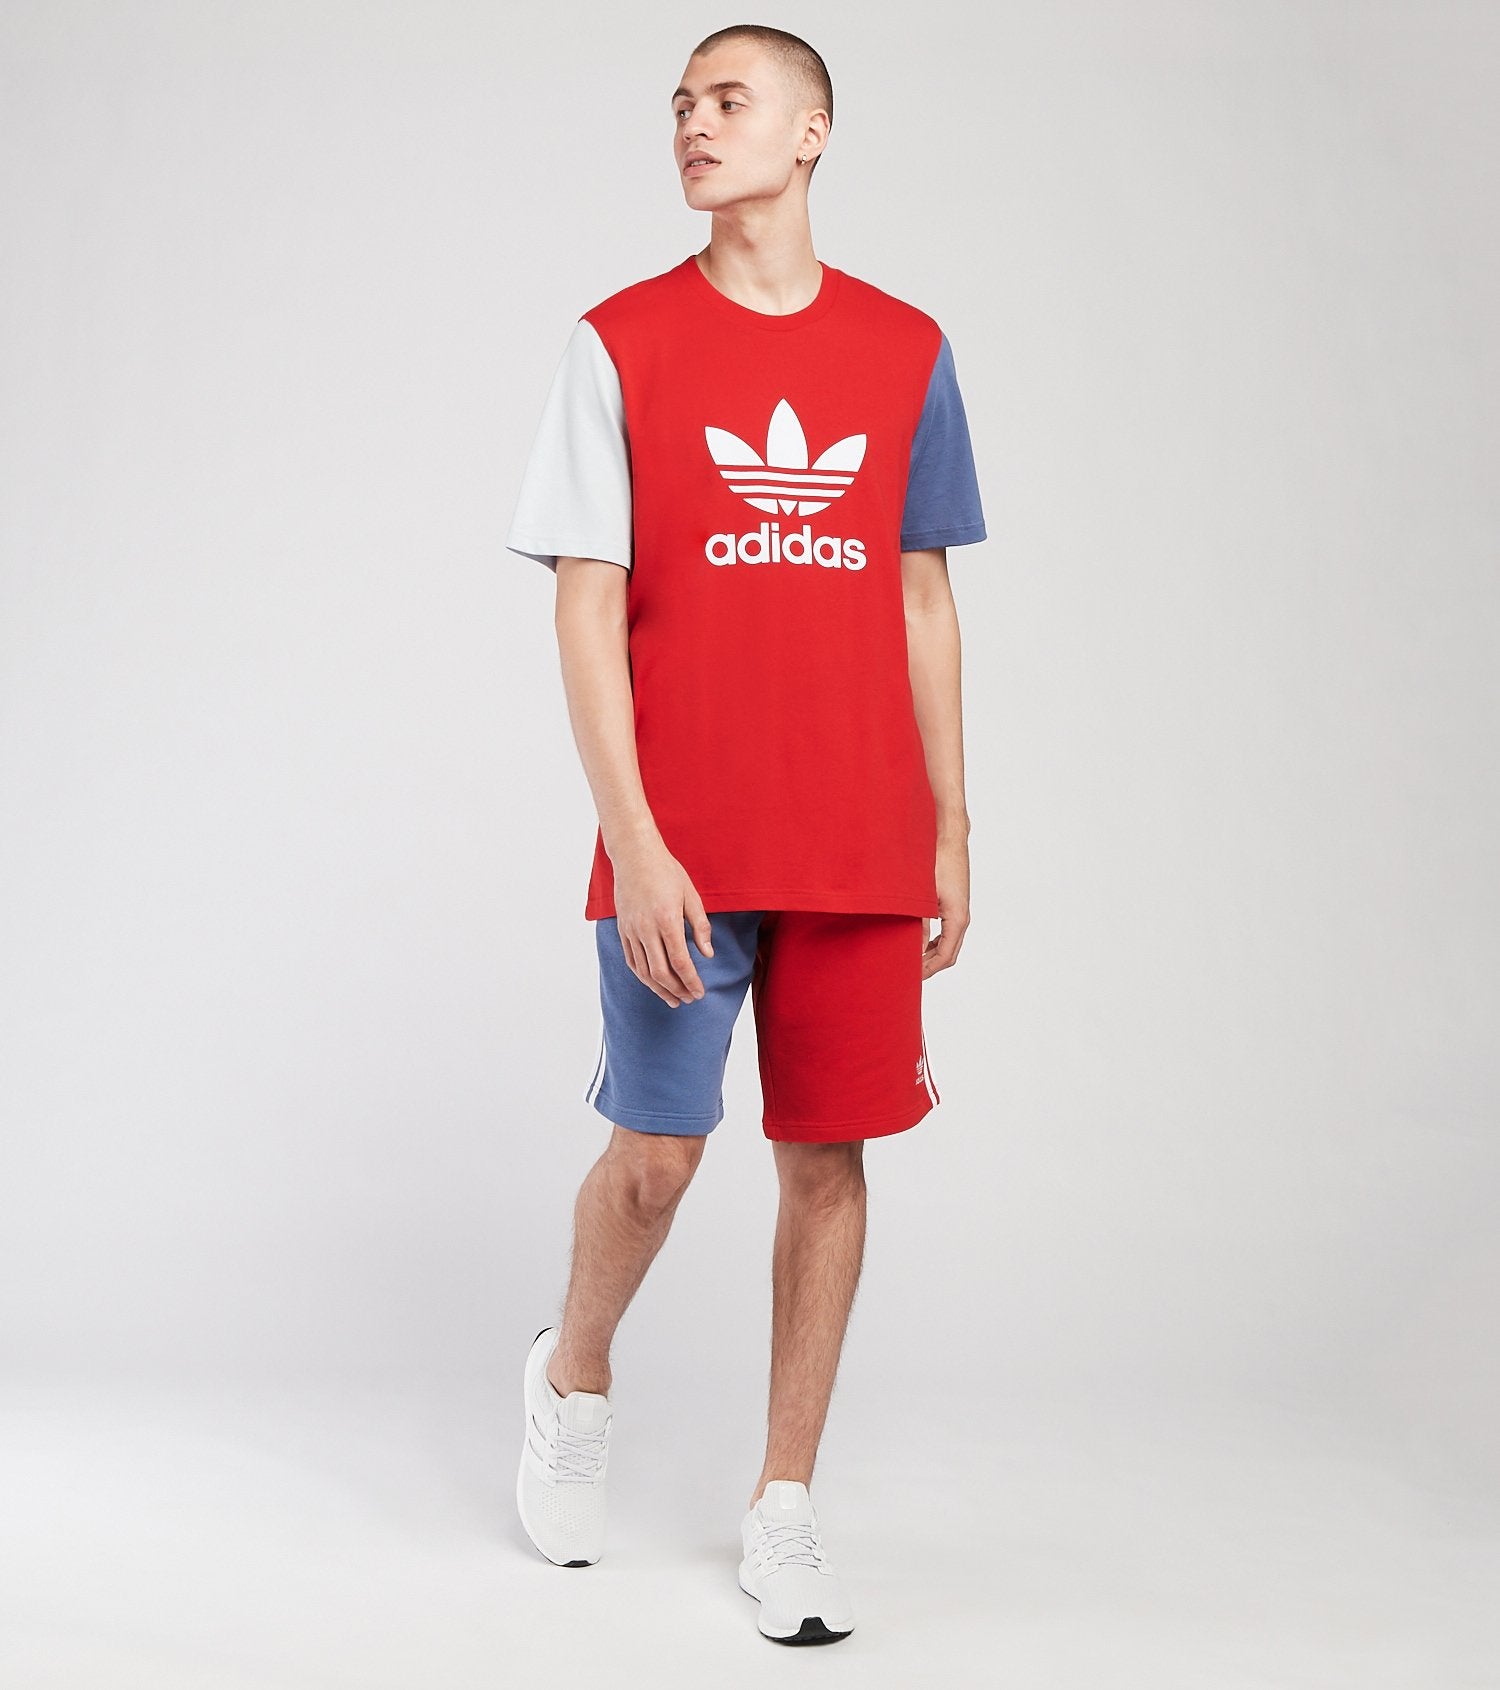 Adidas Original 3-TREFOIL T-SHIRT TEE /HALO Moesports – RED Men\'s -SCARLET